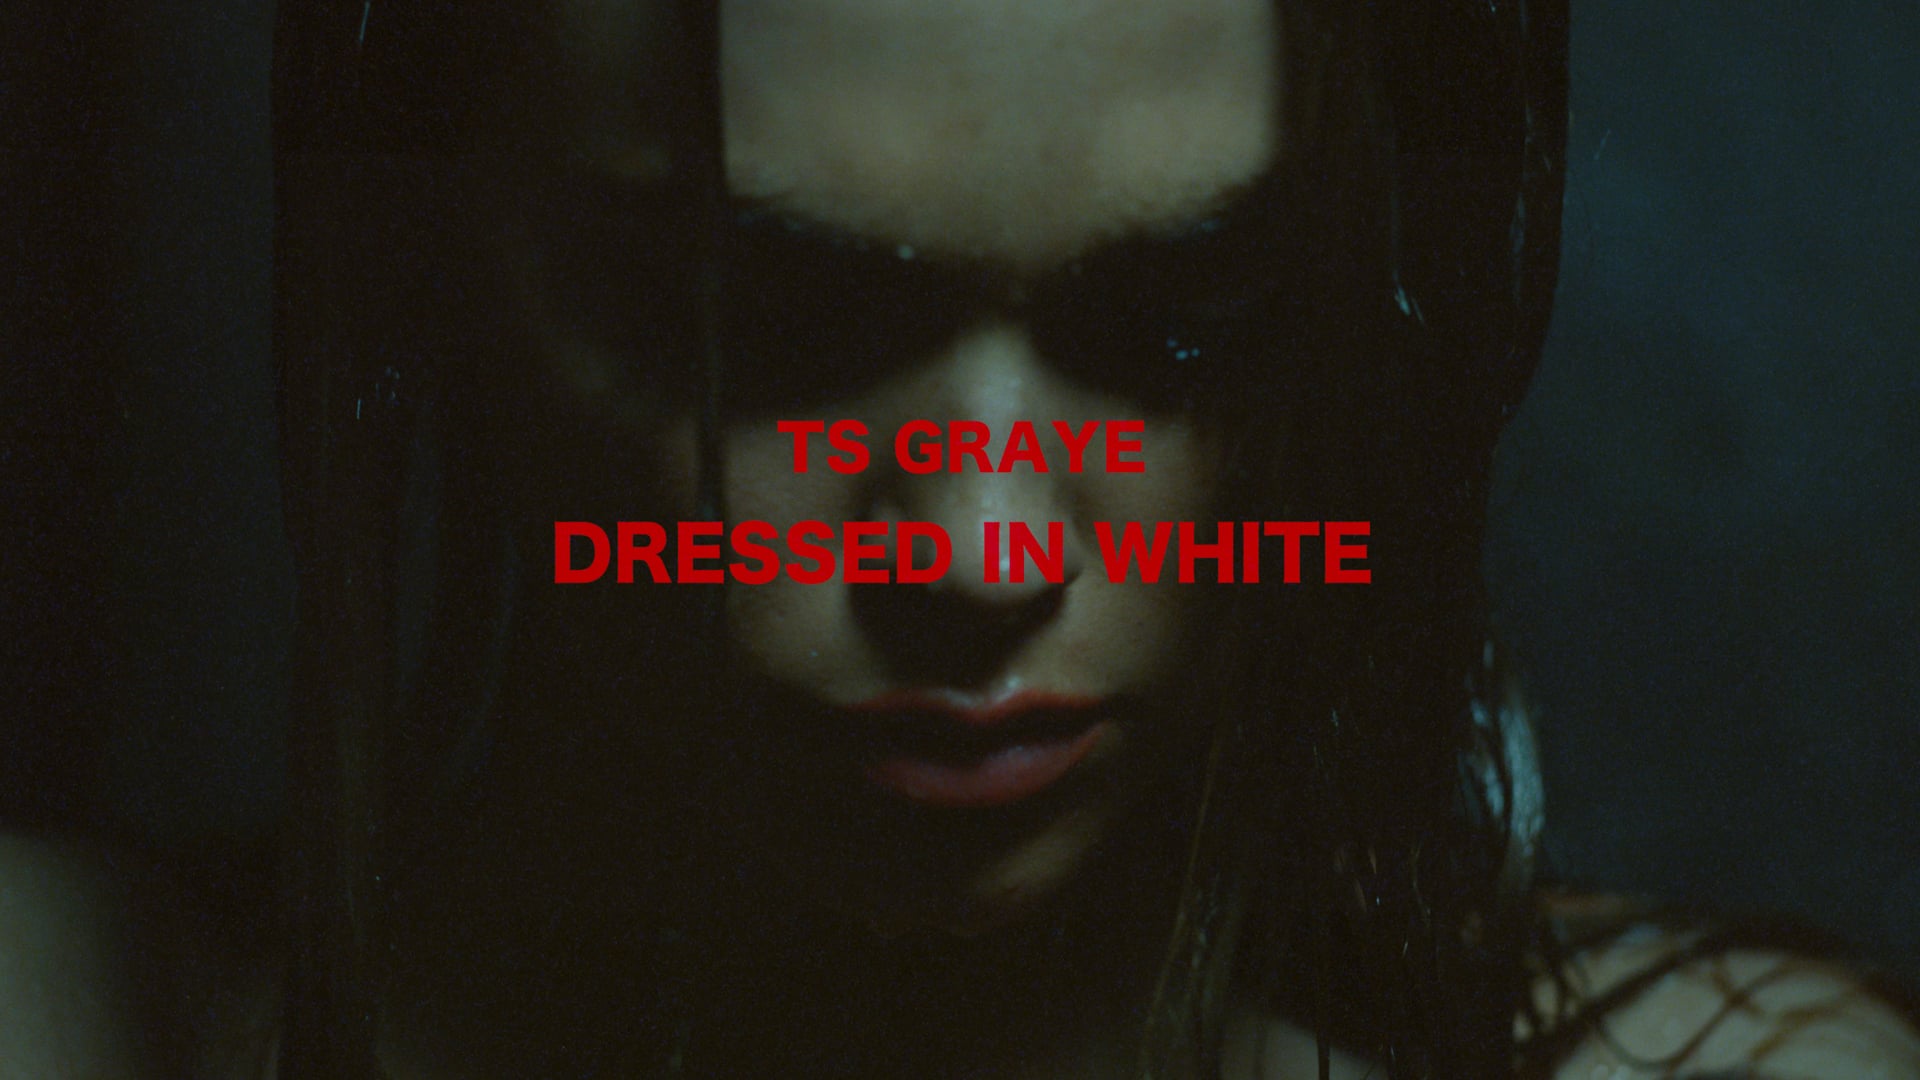 Dressed in White - TS GRAYE  [Music Video] - Director's Cut